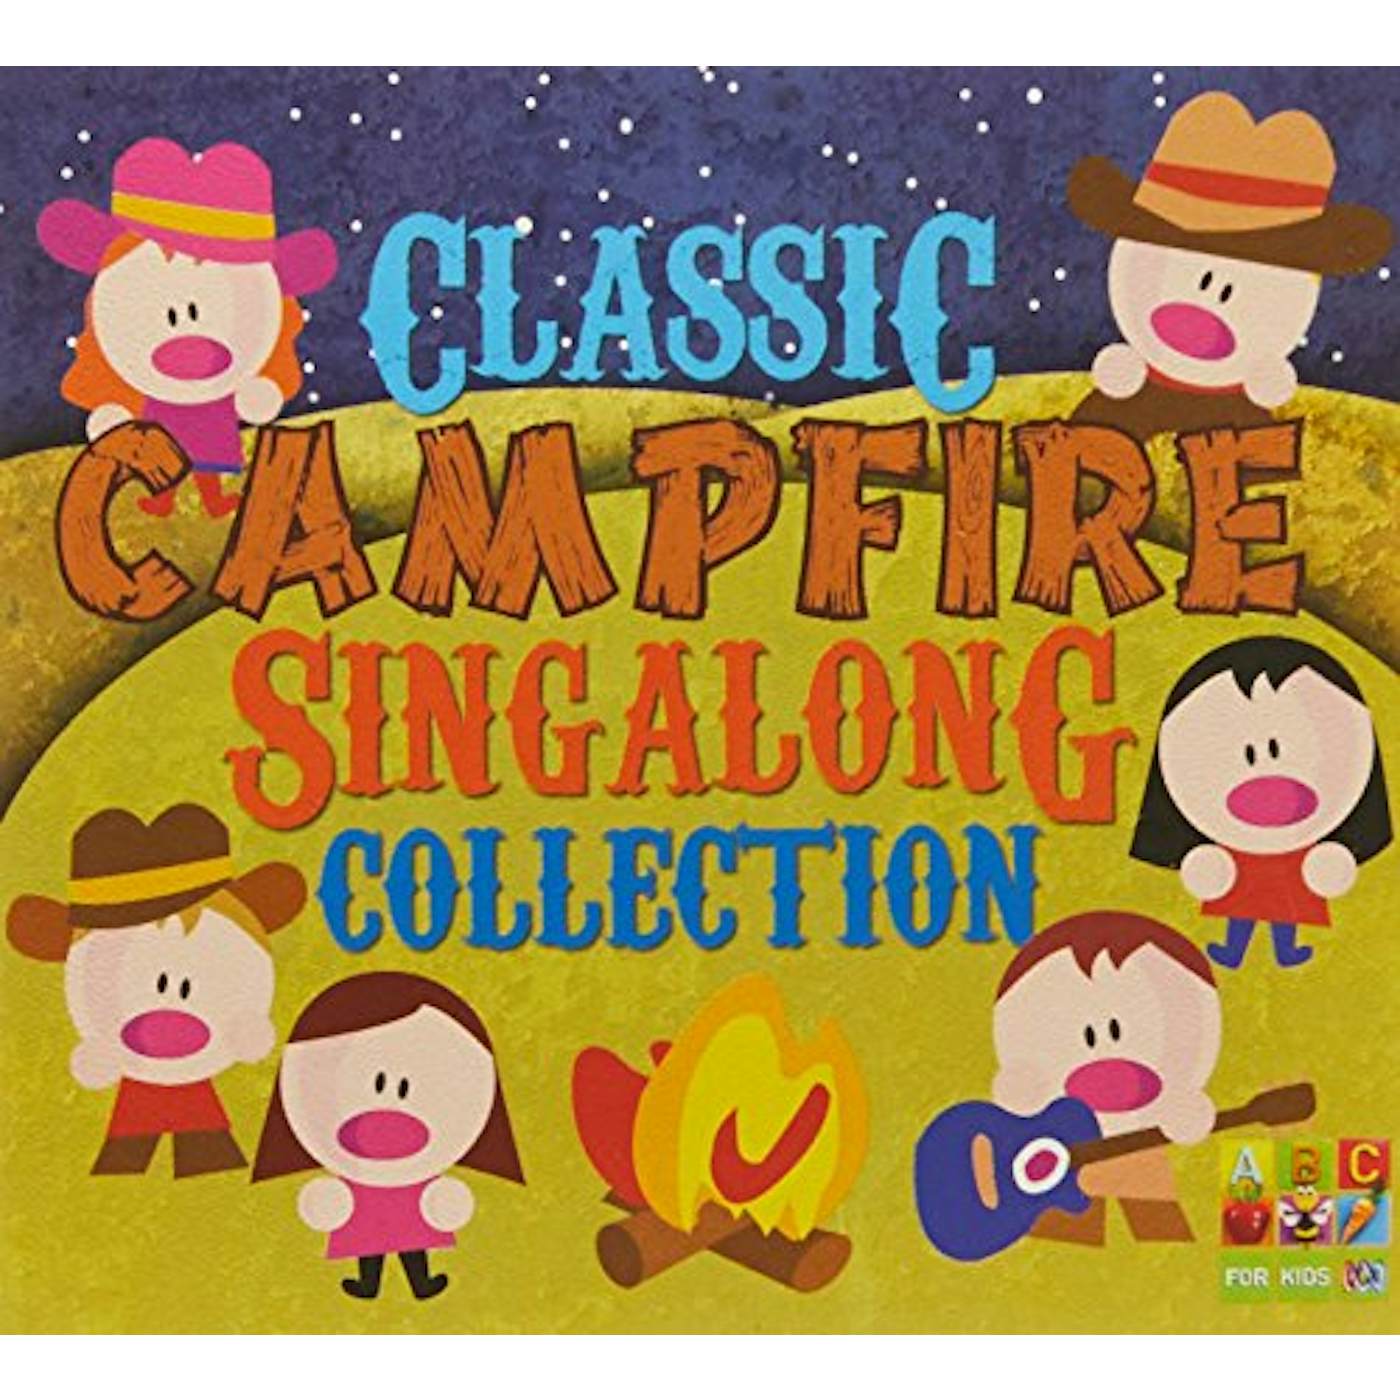 John Kane SING: CLASSIC CAMPFIRE COLLECTION CD